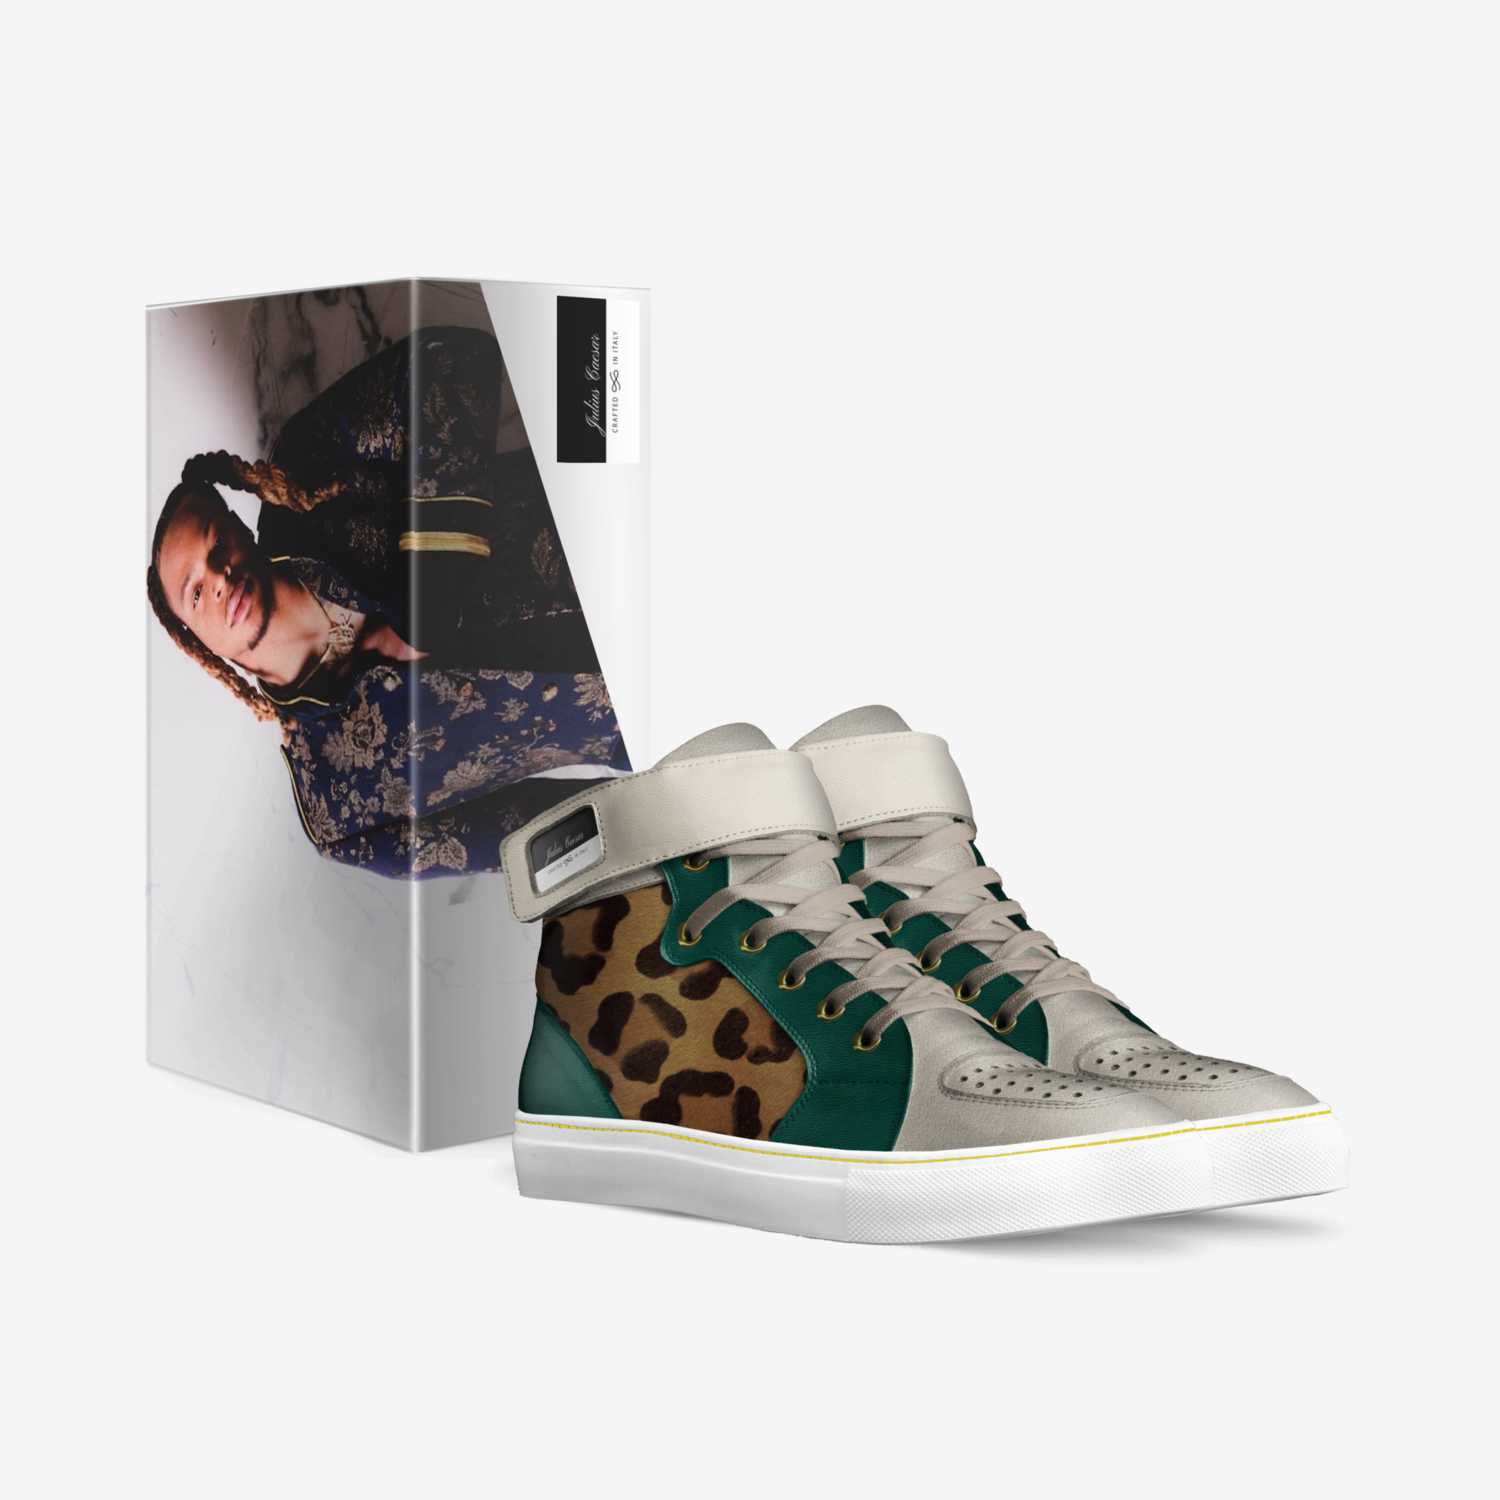 Julius Caesar custom made in Italy shoes by Julian Da Don | Box view